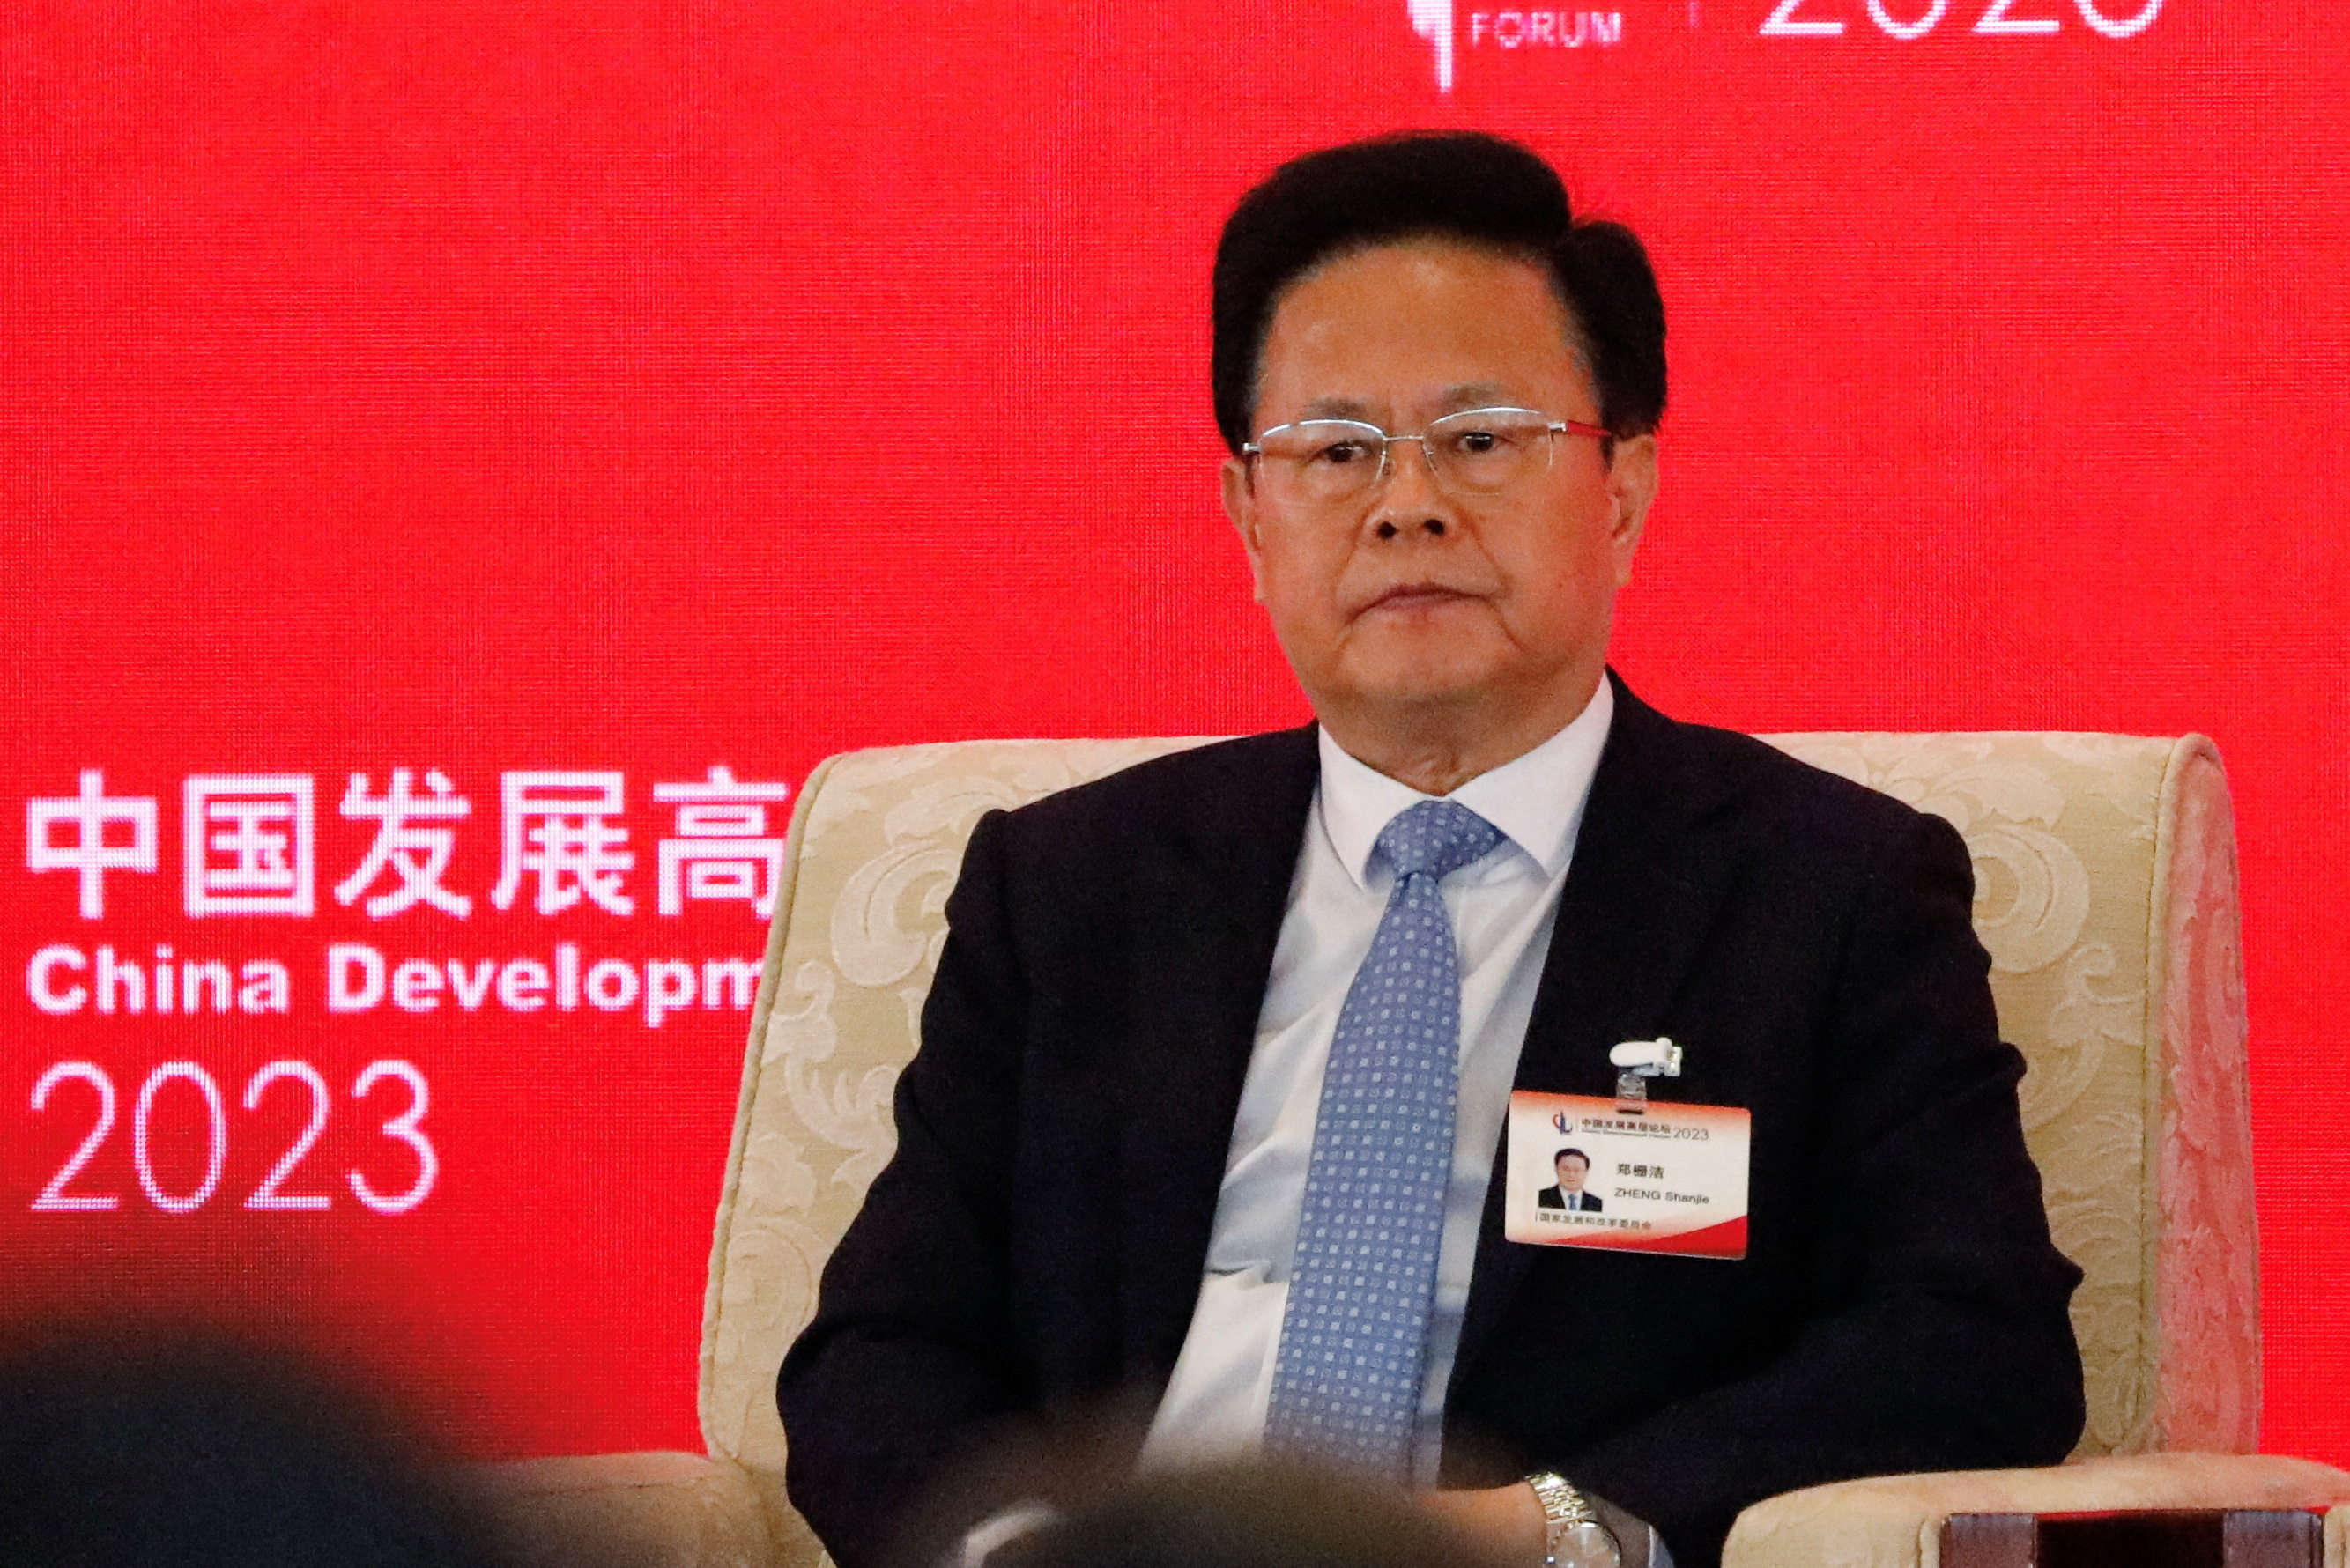 China Development Forum 2023 in Beijing